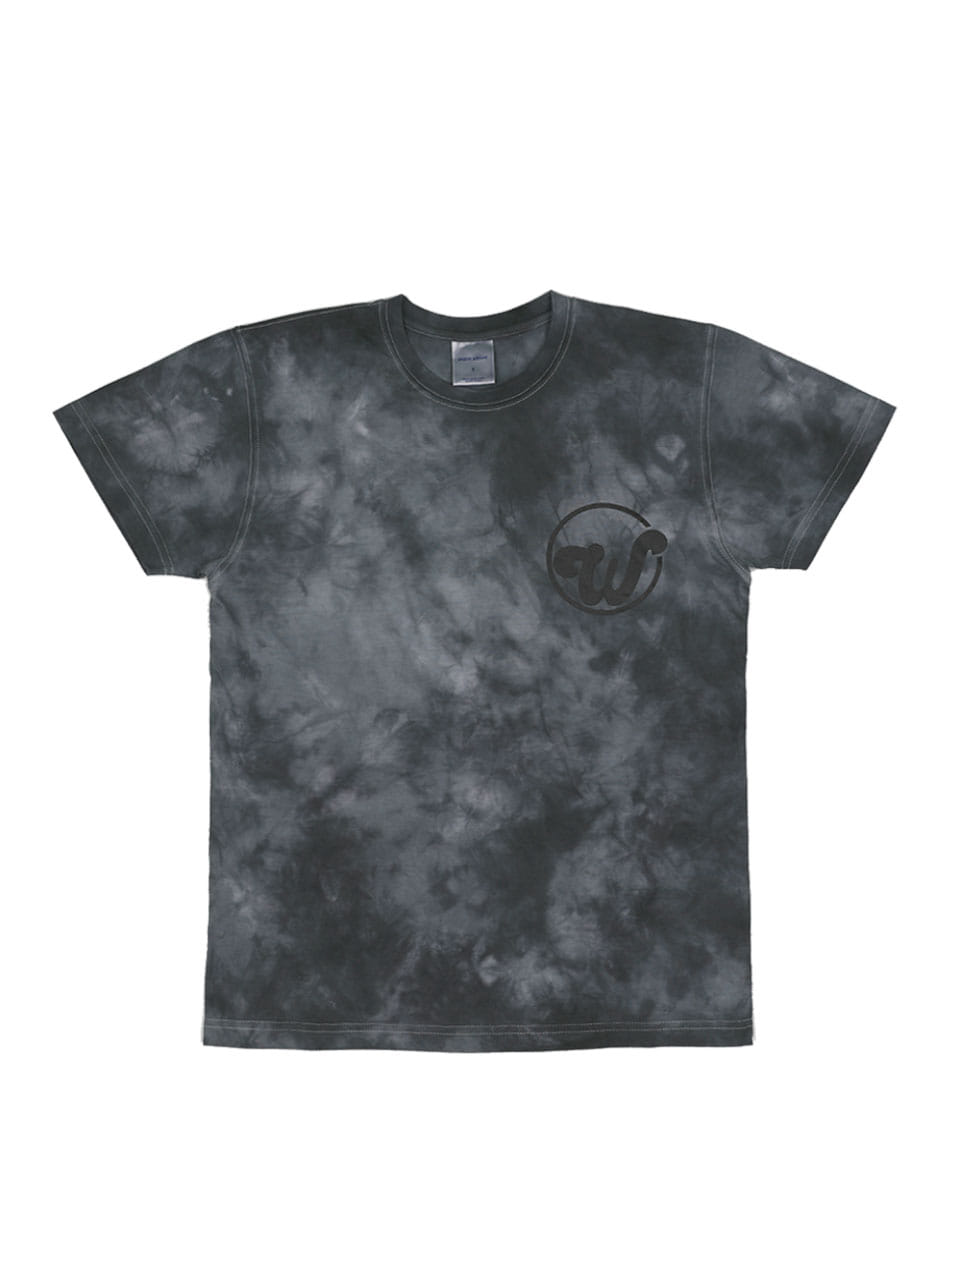 Tie-dye short sleeve T-shirt dark gray (Exclusive)